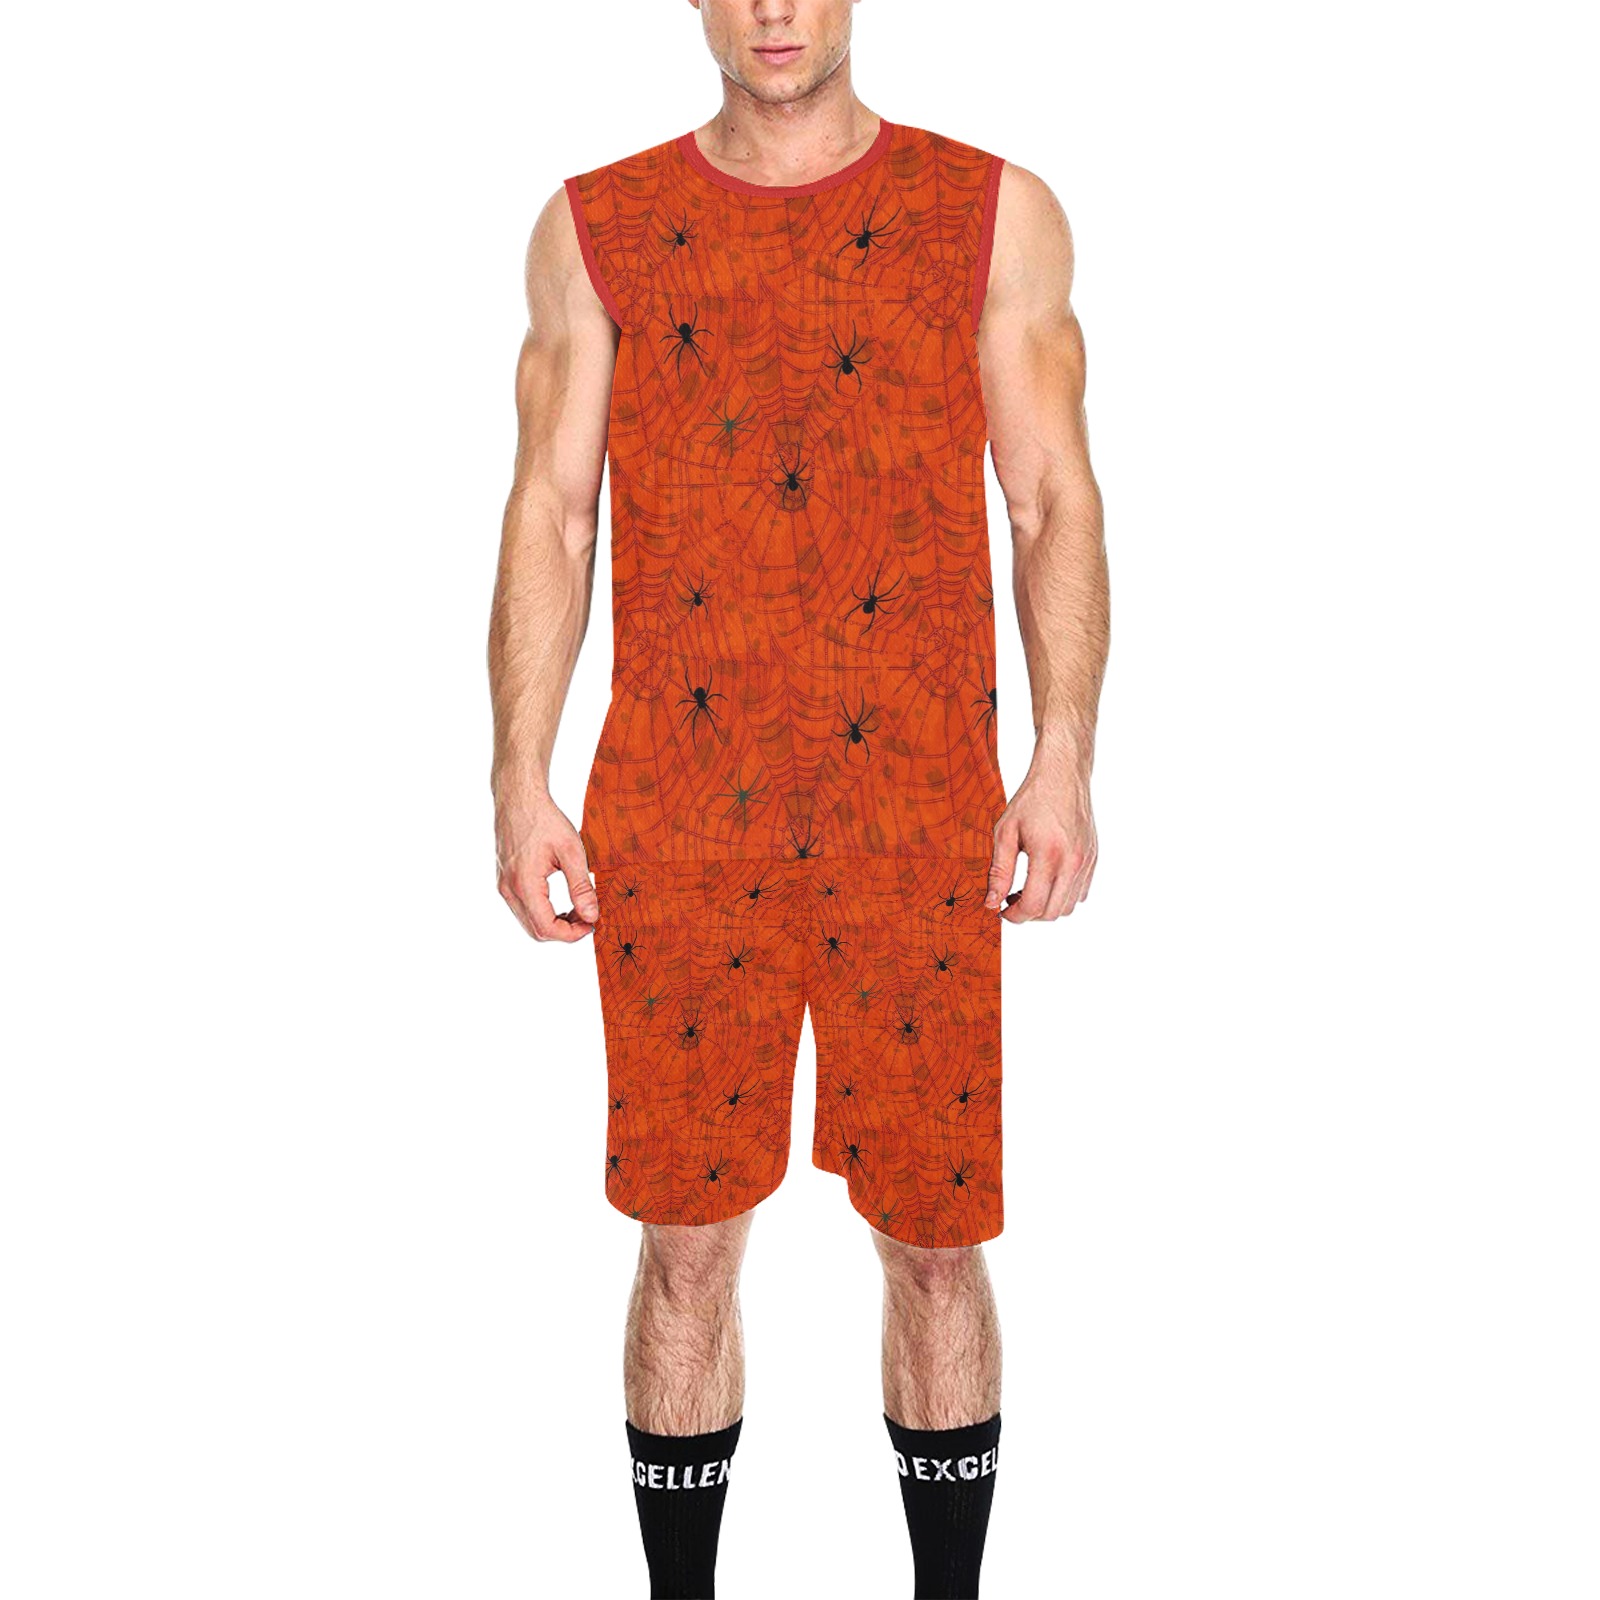 Halloween Spider by Artdream All Over Print Basketball Uniform